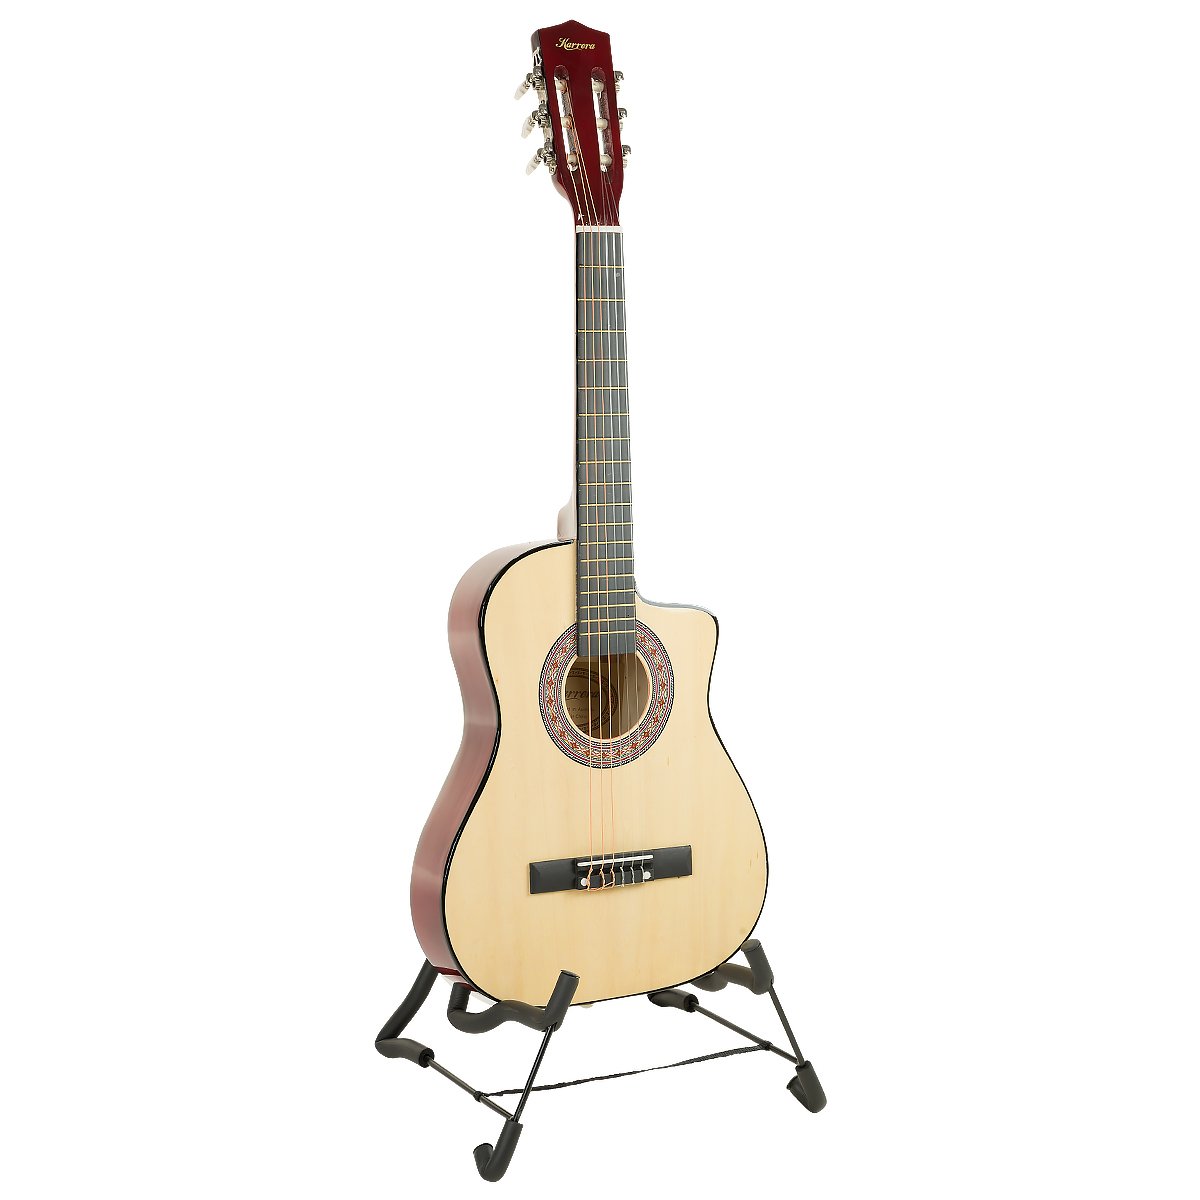 38in Pro Cutaway Acoustic Guitar with guitar bag - Natural 1